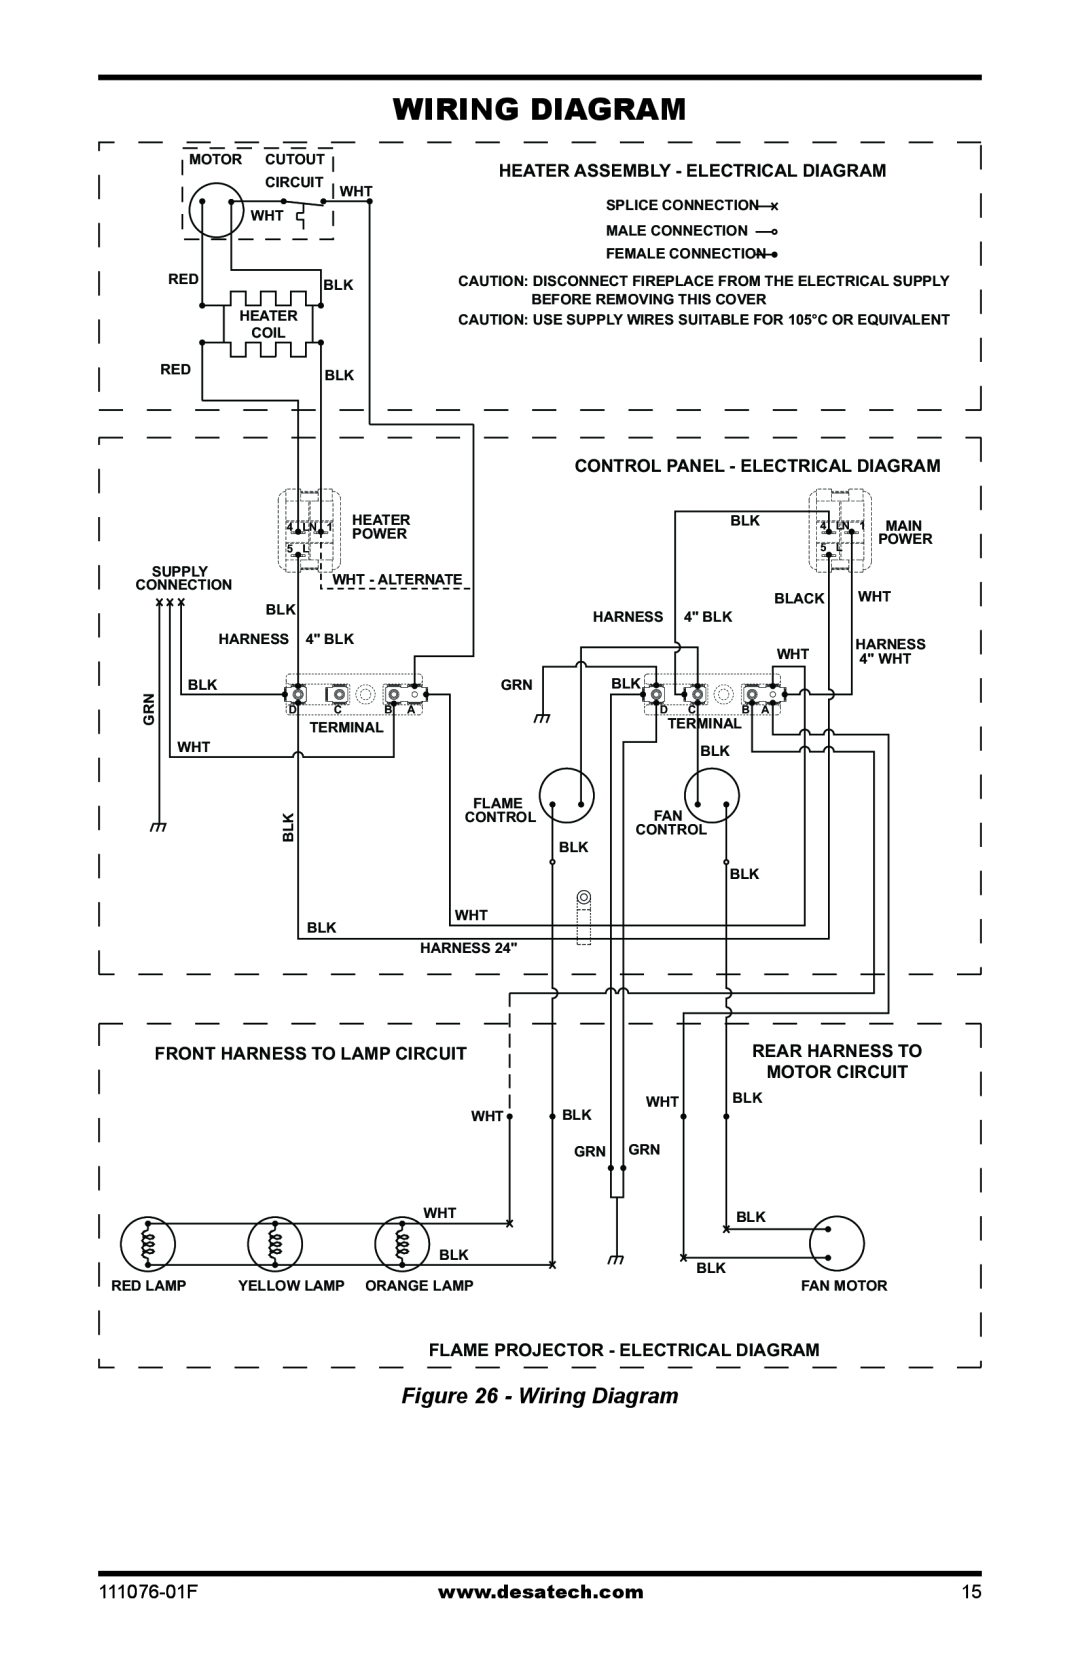 Desa E32LB, E36LH, E36LBH, E32LH Wiring Diagram, Heater Assembly - Electrical Diagram, Control Panel - Electrical Diagram 